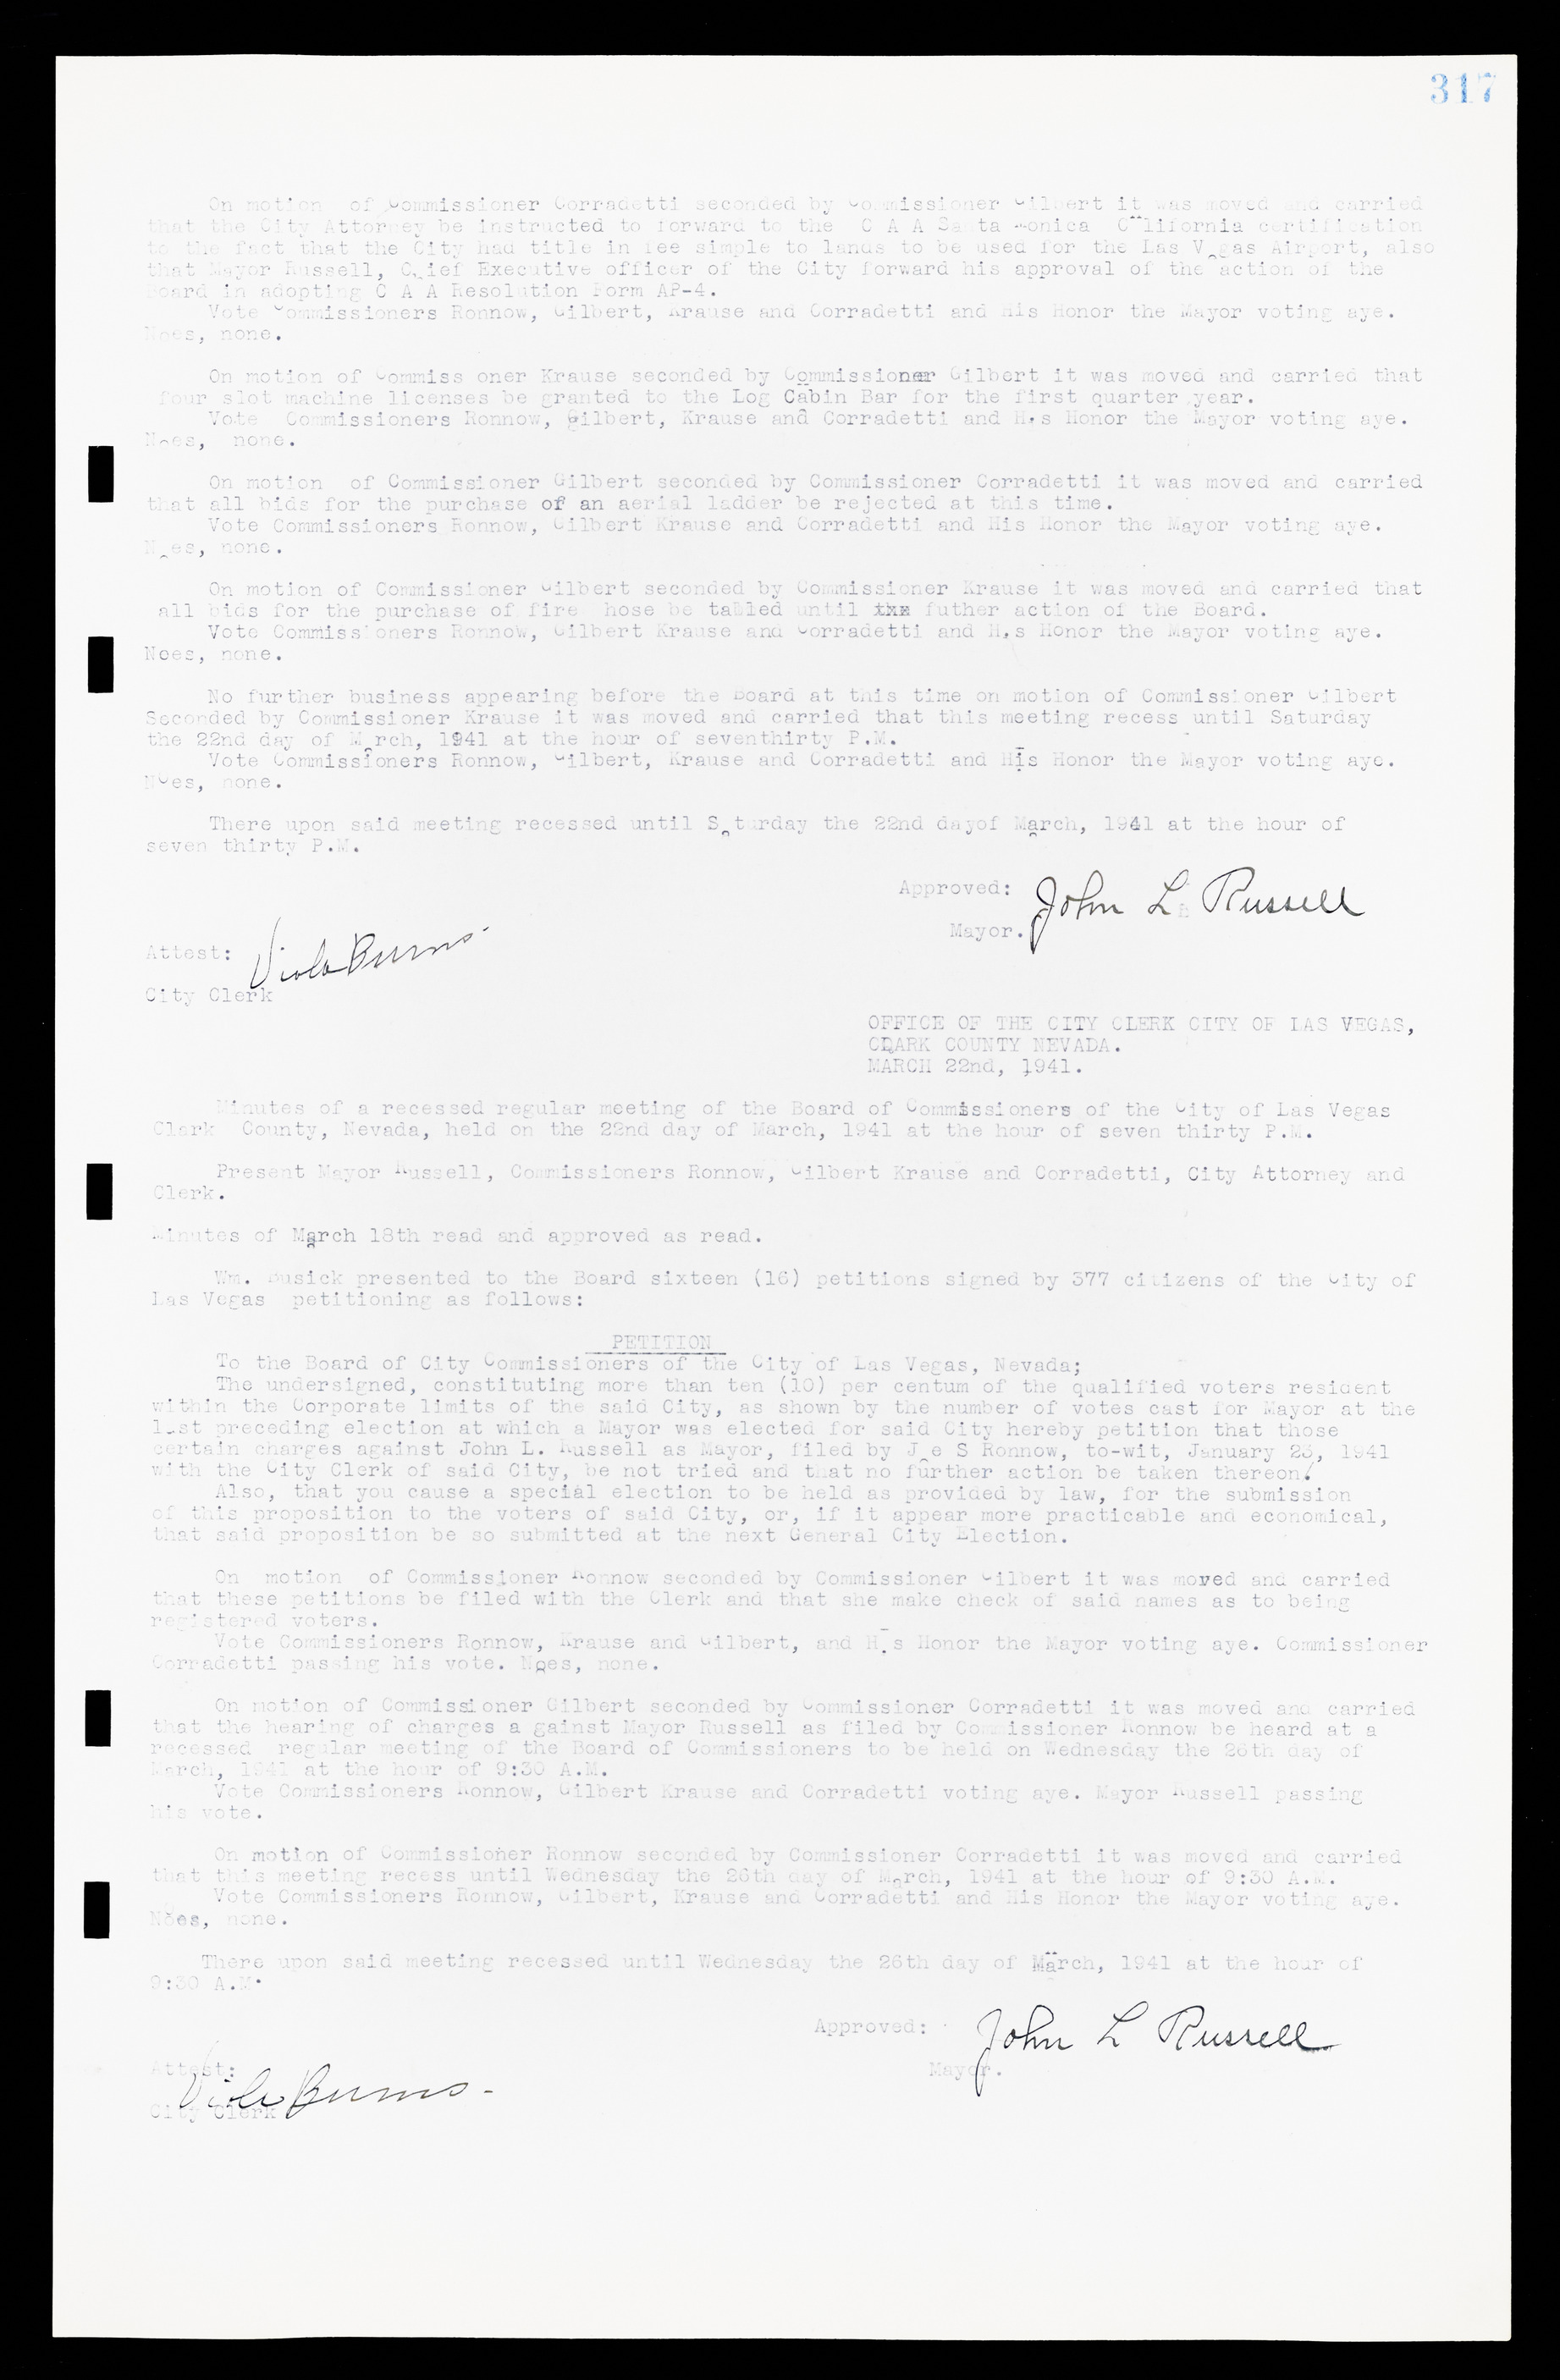 Las Vegas City Commission Minutes, February 17, 1937 to August 4, 1942, lvc000004-341